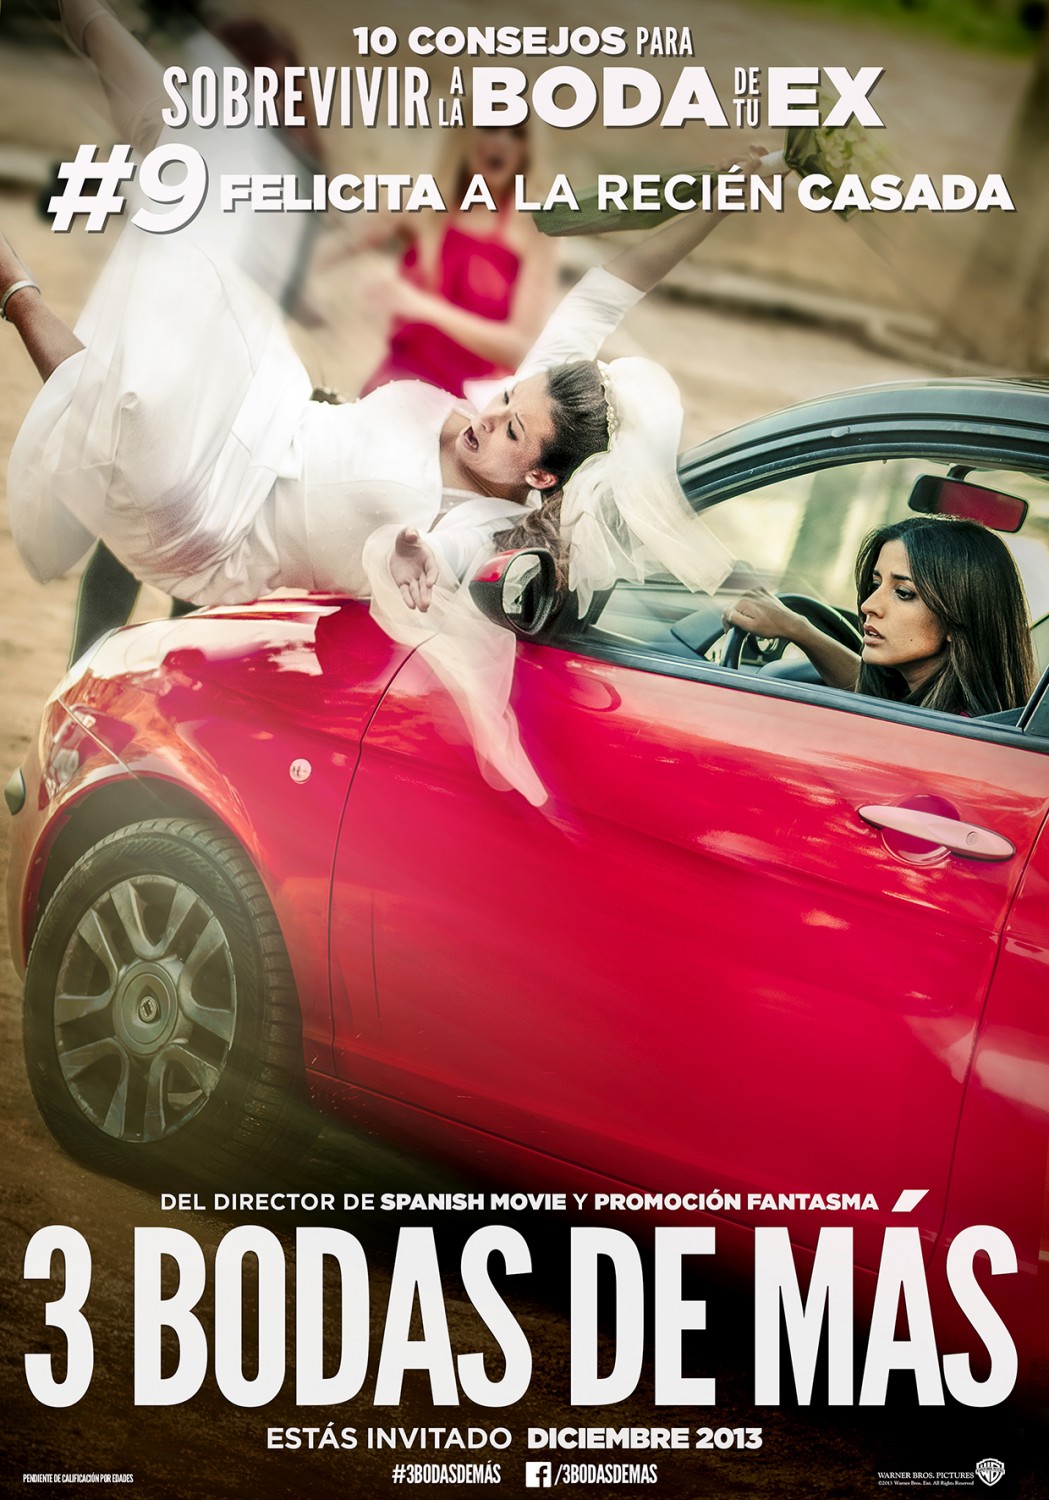 Extra Large Movie Poster Image for Tres bodas de más (#11 of 20)